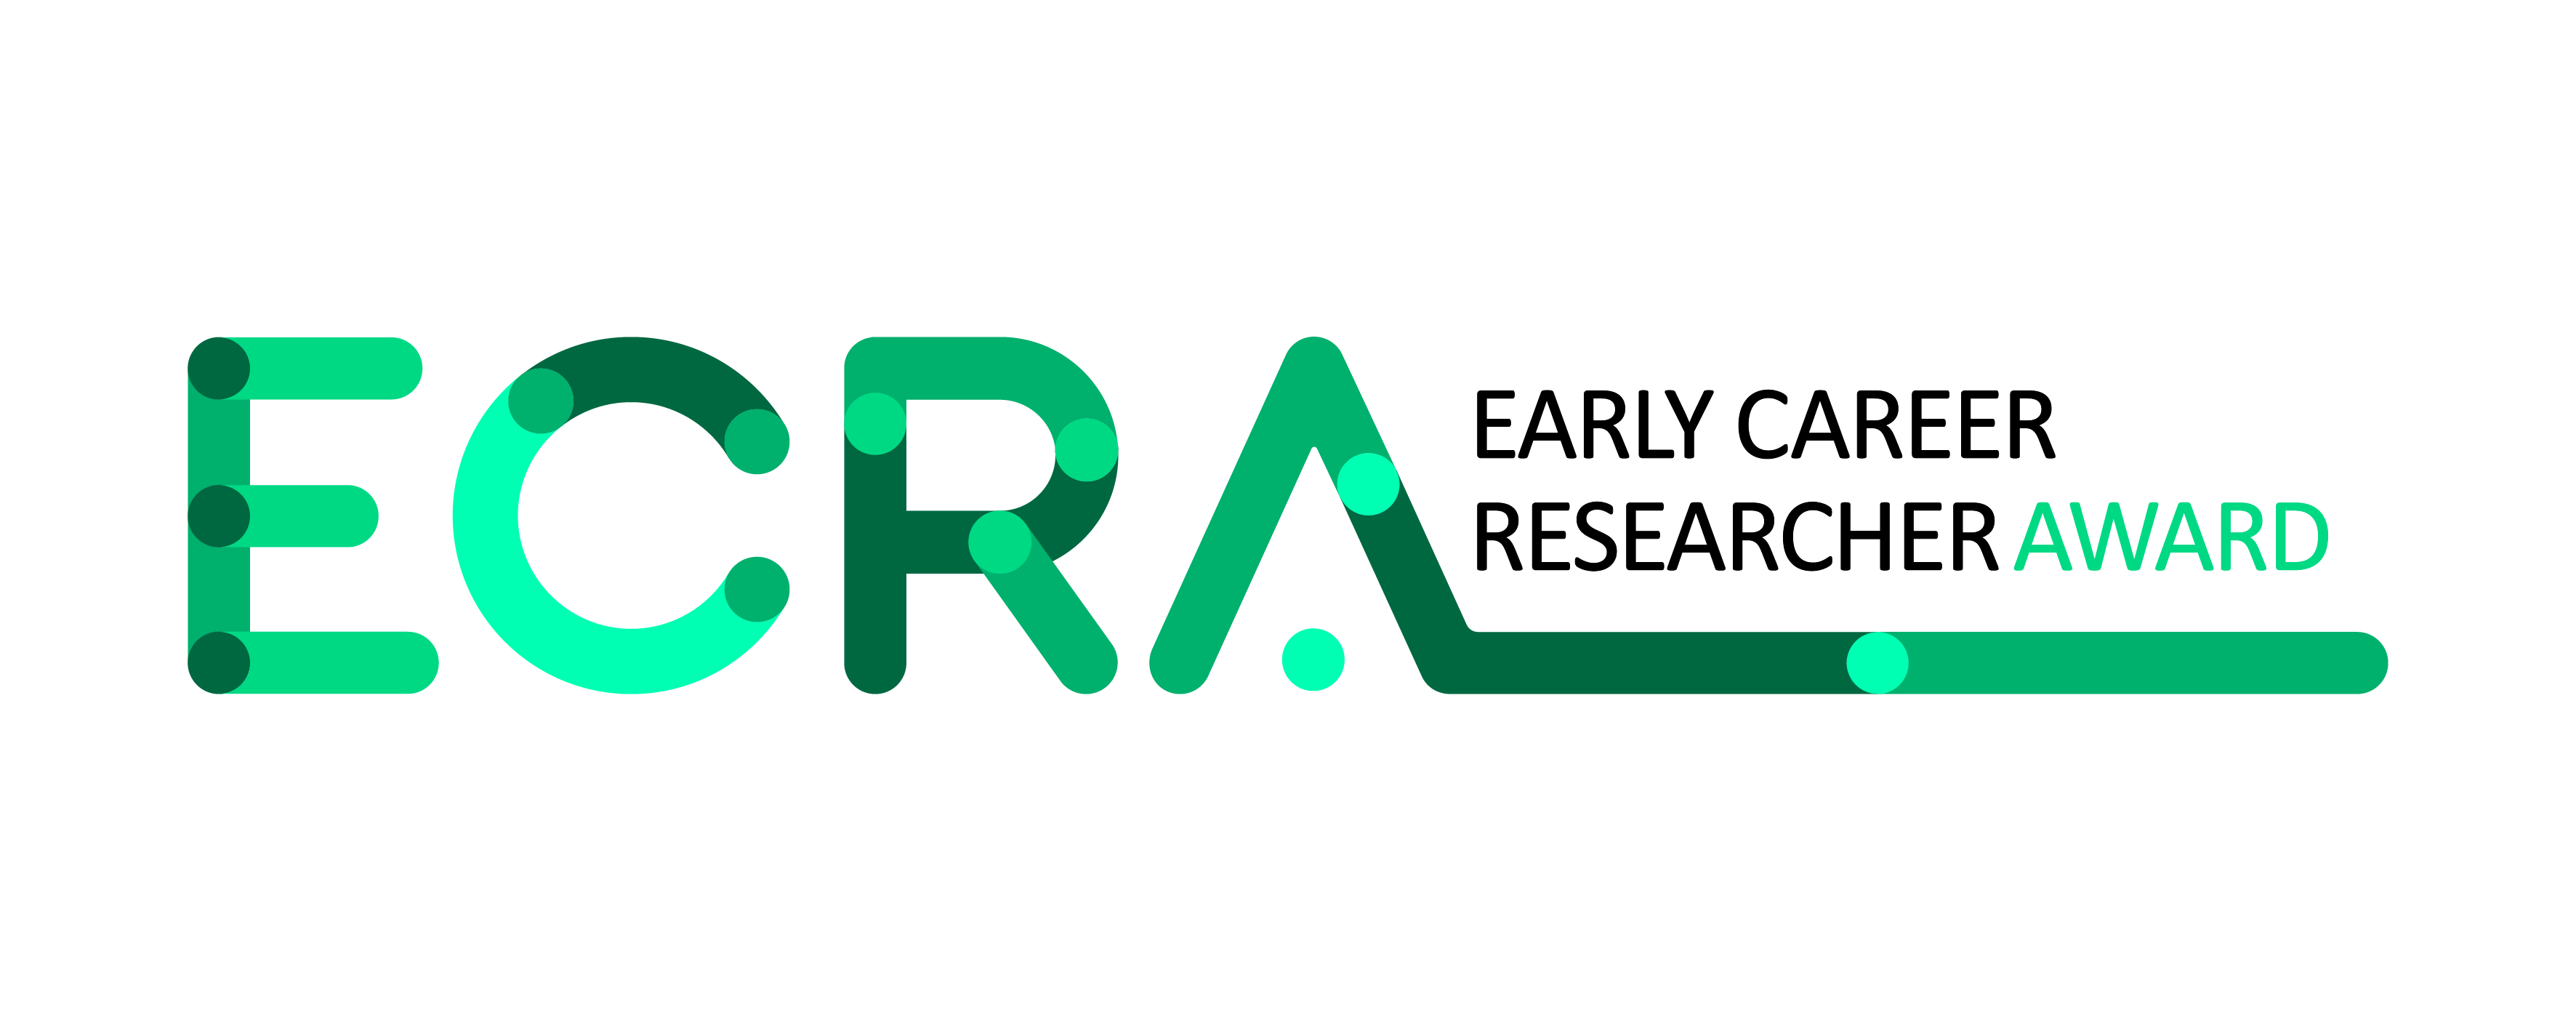 ECRA logo 1